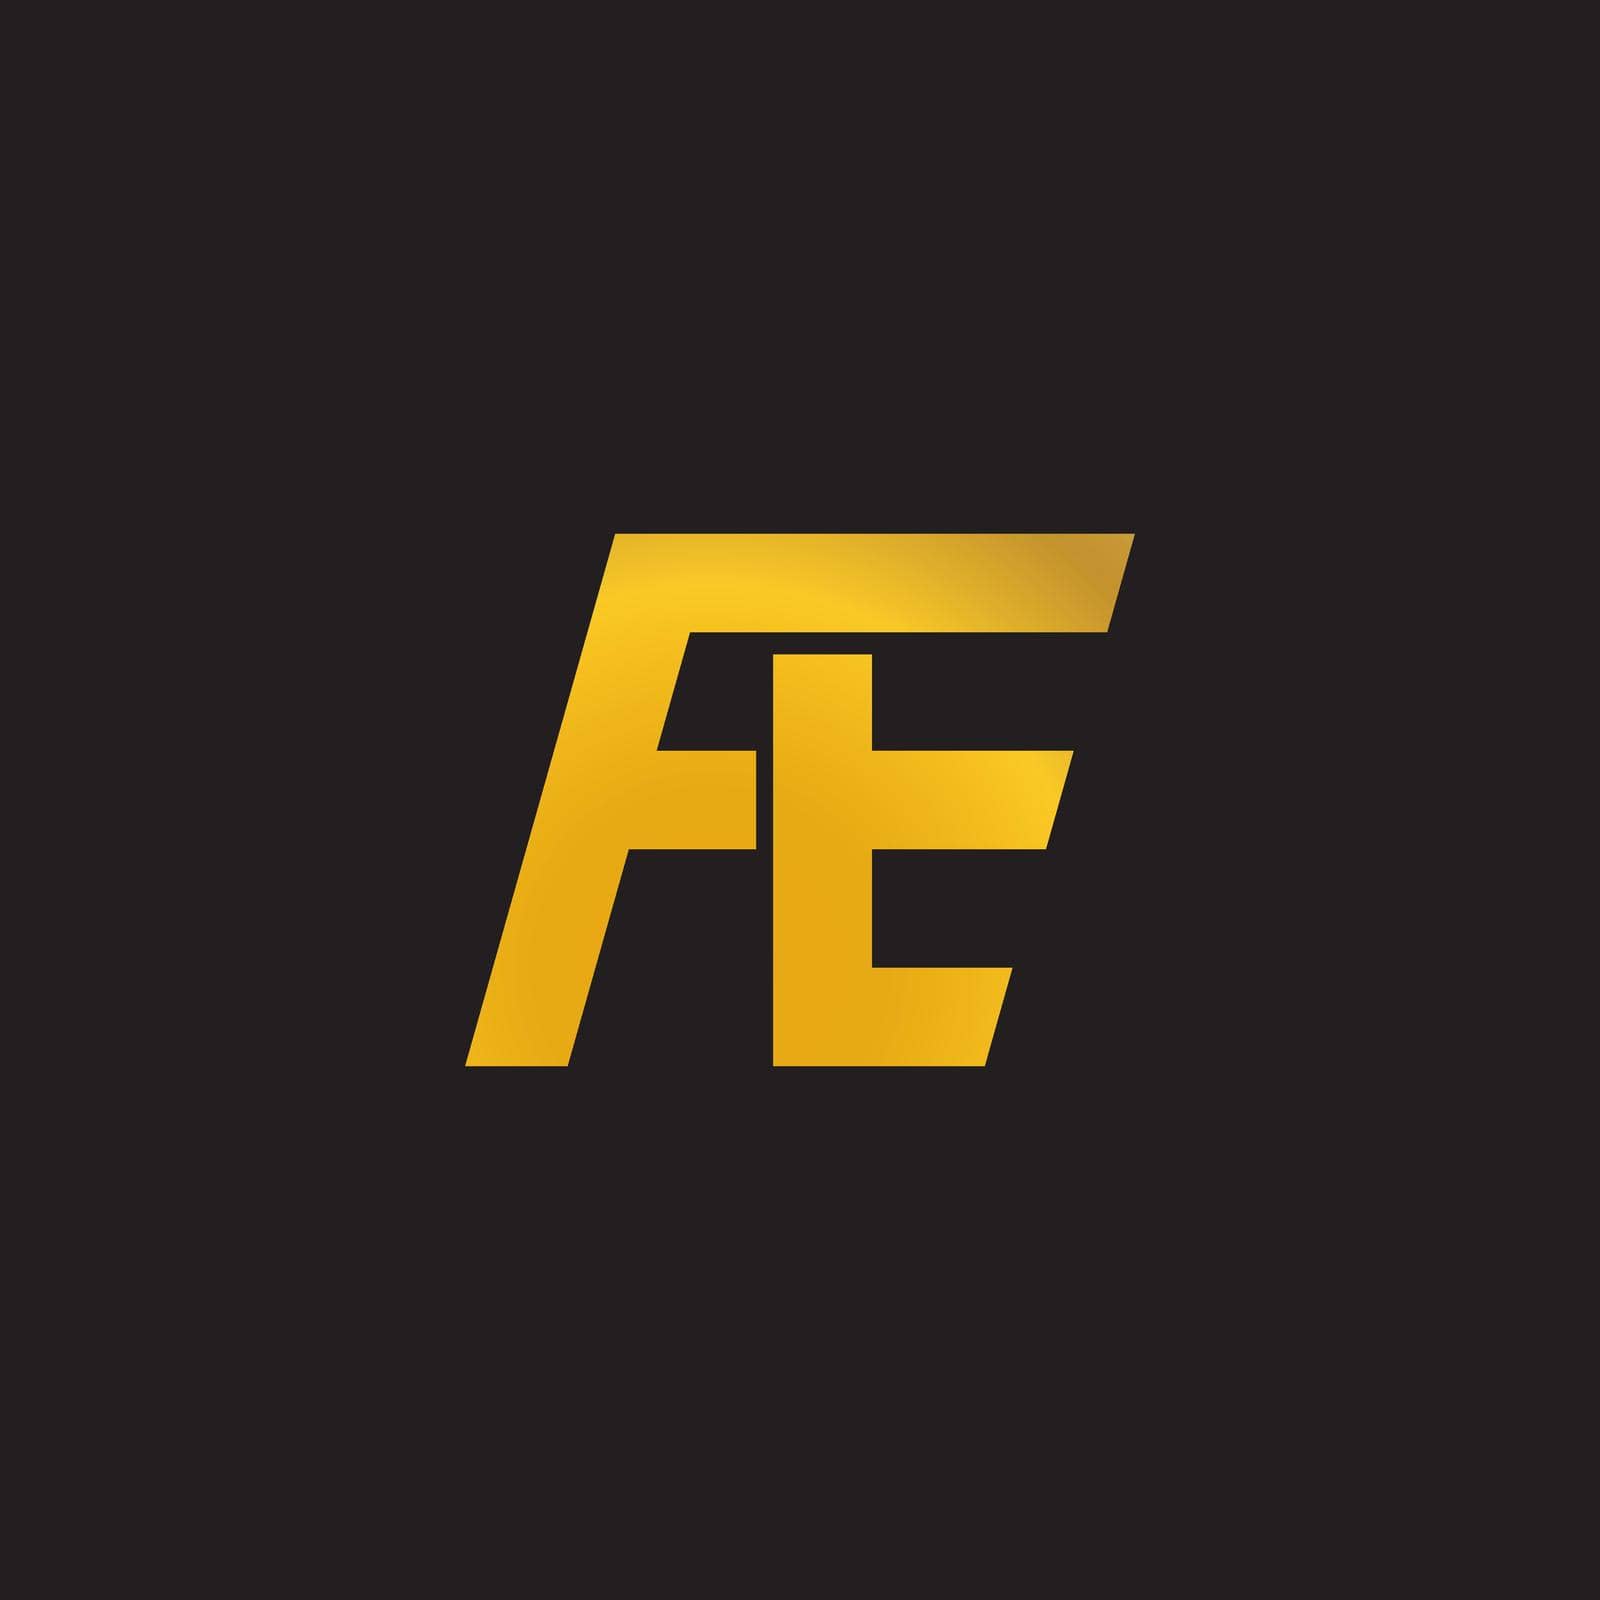 Golden AE logo vector icon illustration on black background